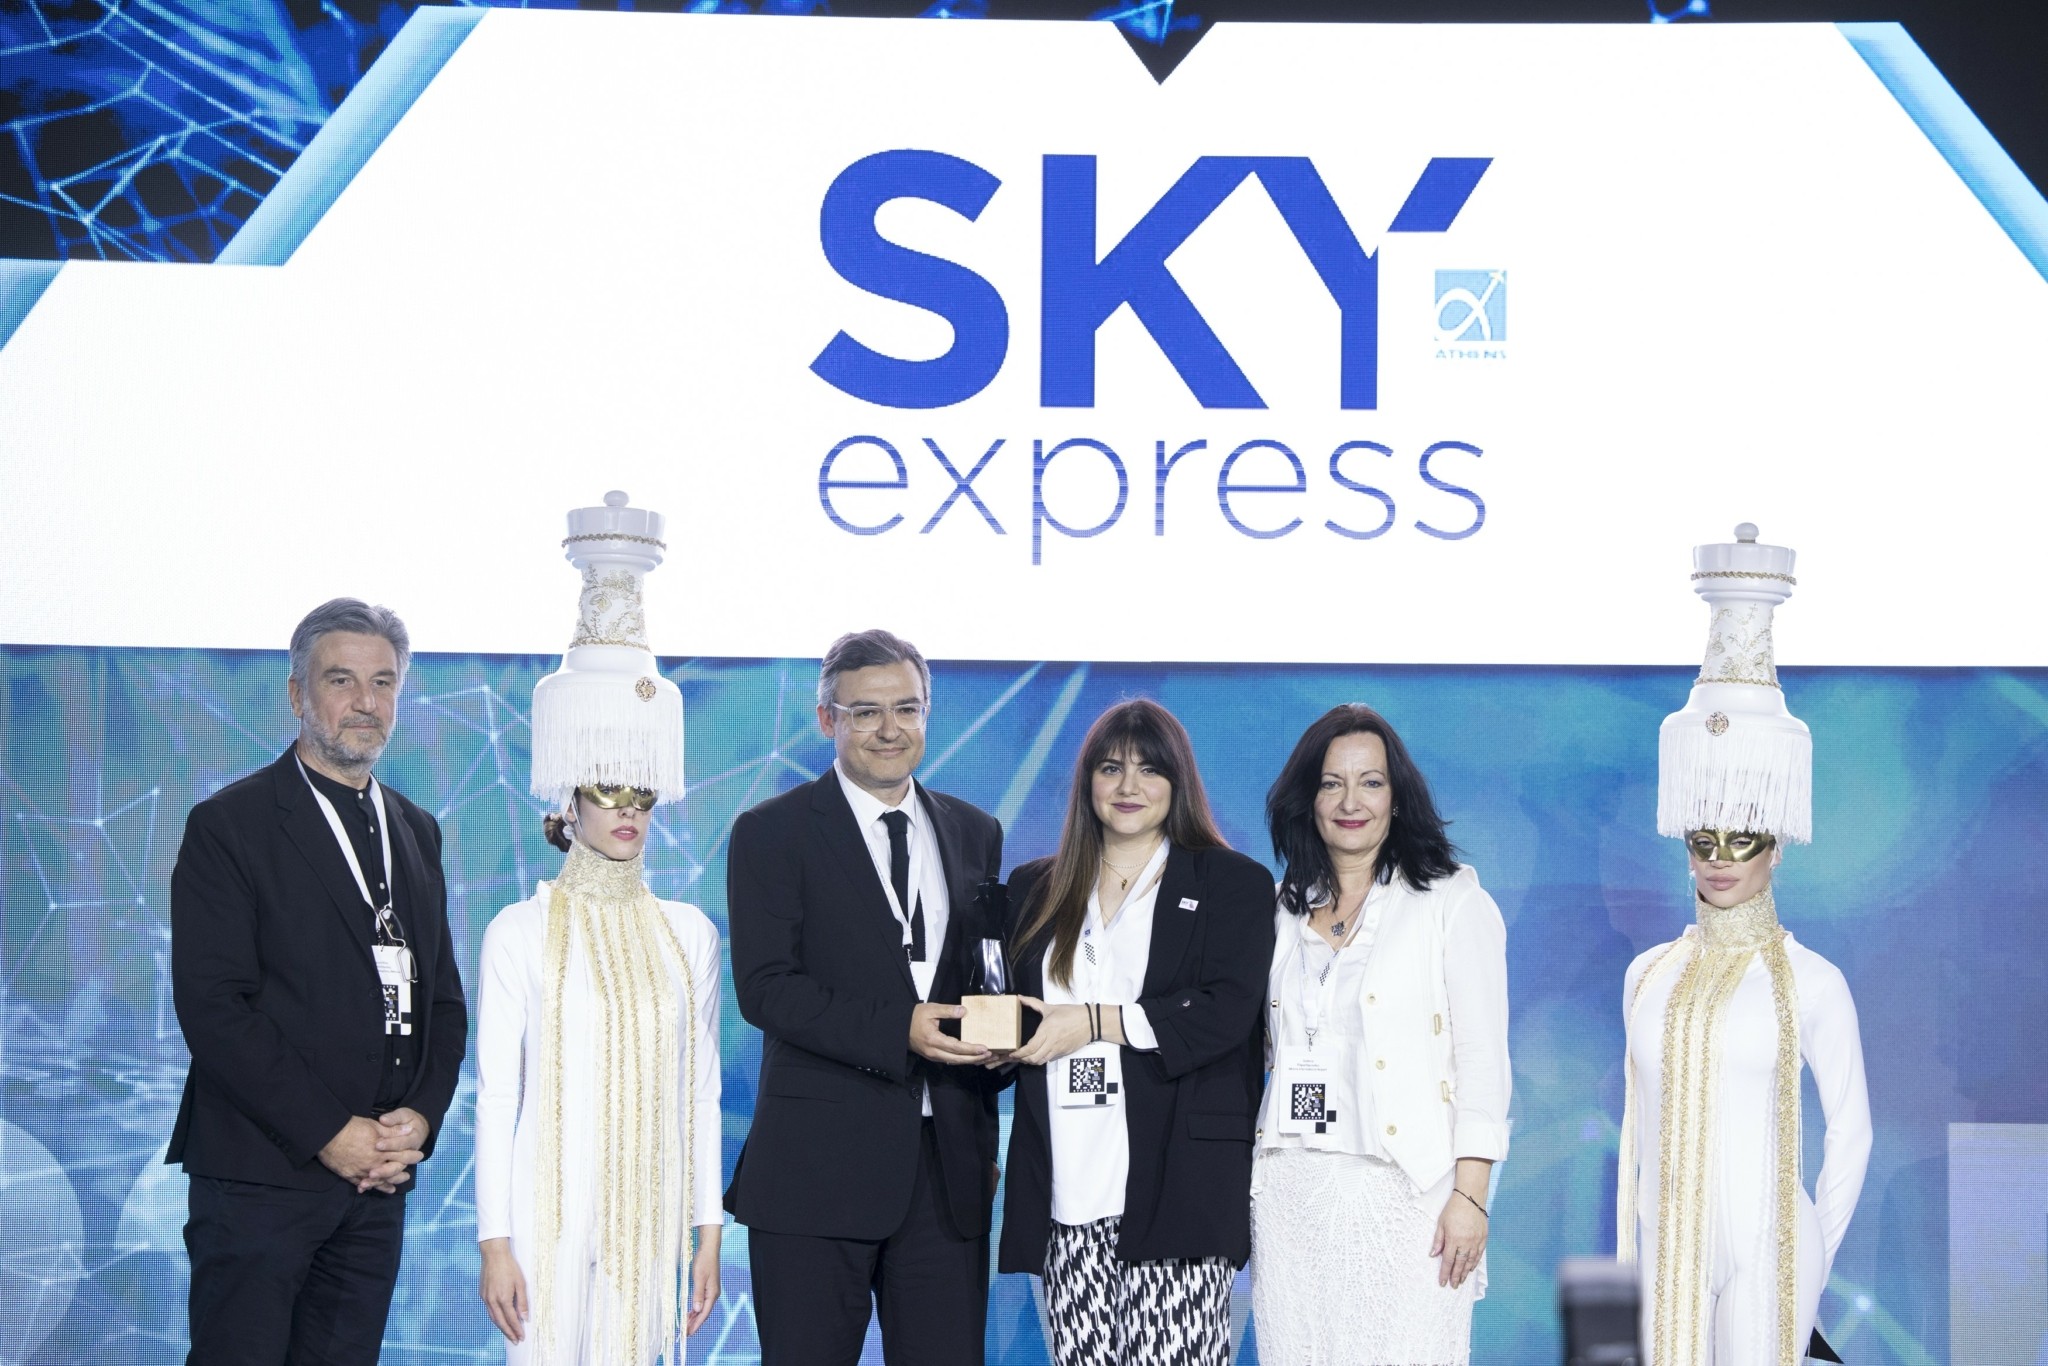 SKY express: 3 ακόμη διακρίσεις για τη διπλά βραβευμένη στην Ευρώπη ελληνική αεροπορική εταιρεία (pic)